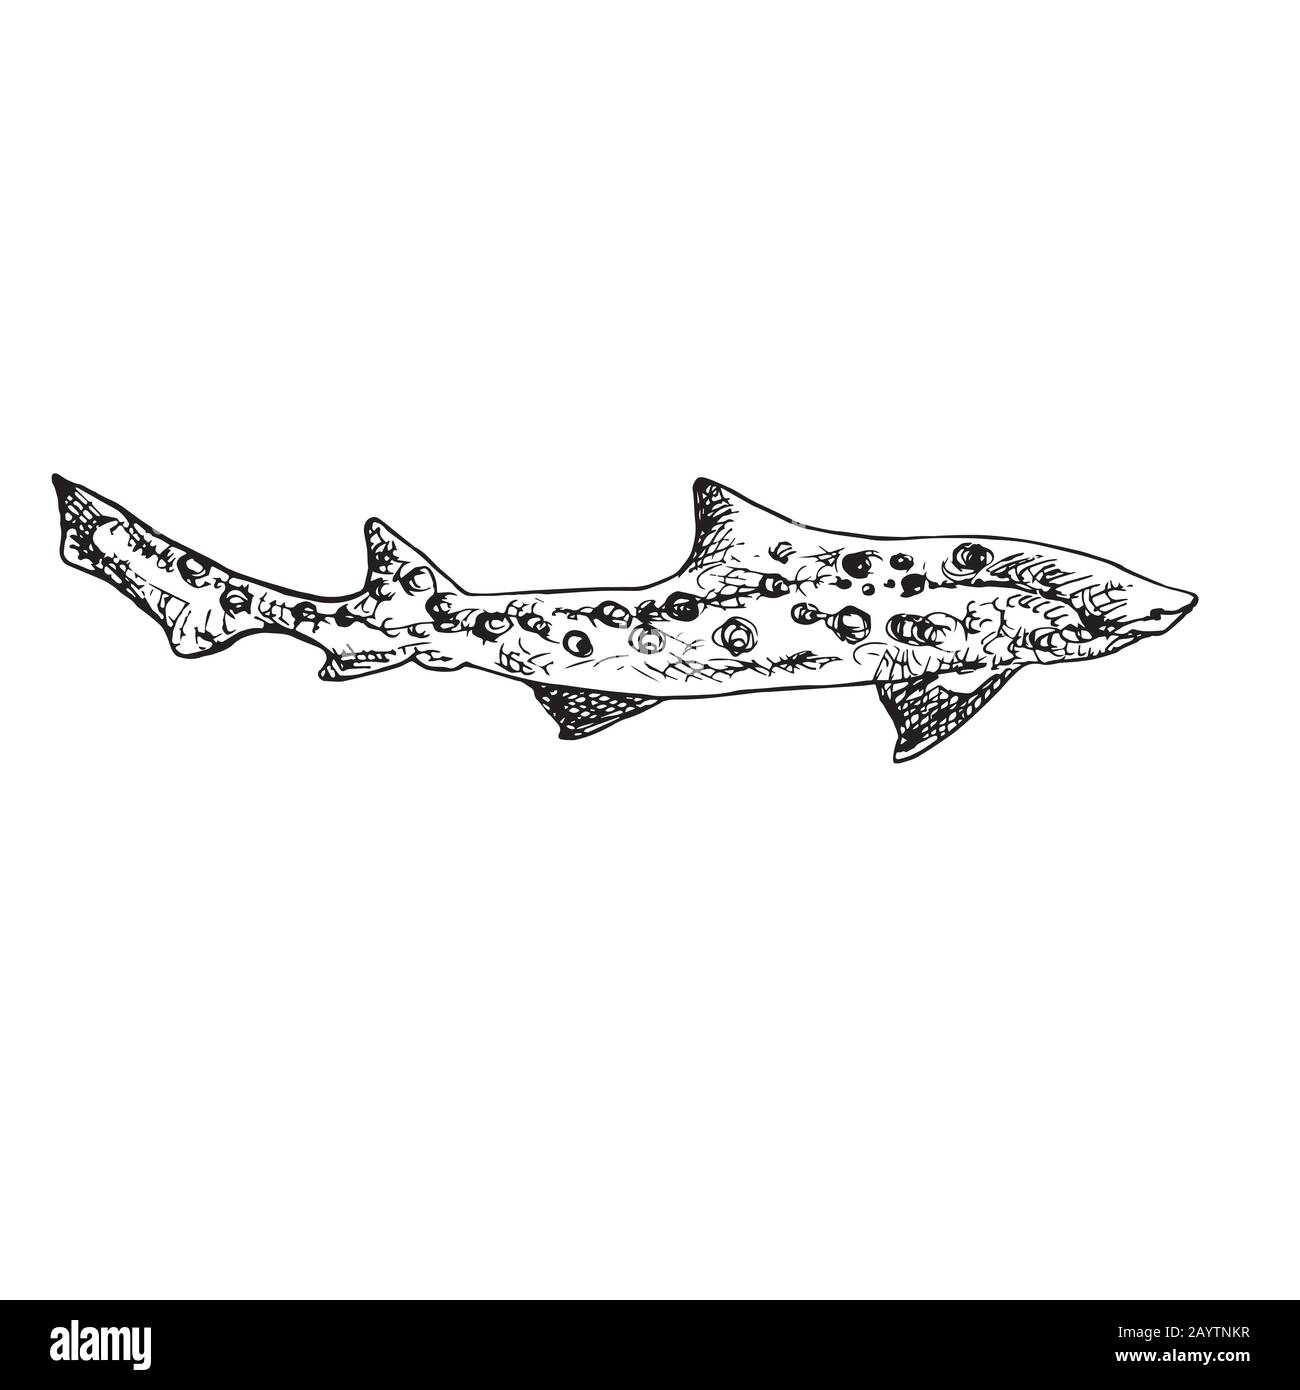 The leopard shark (Triakis semifasciata), hand drawn doodle, sketch,  outline illustration Stock Photo